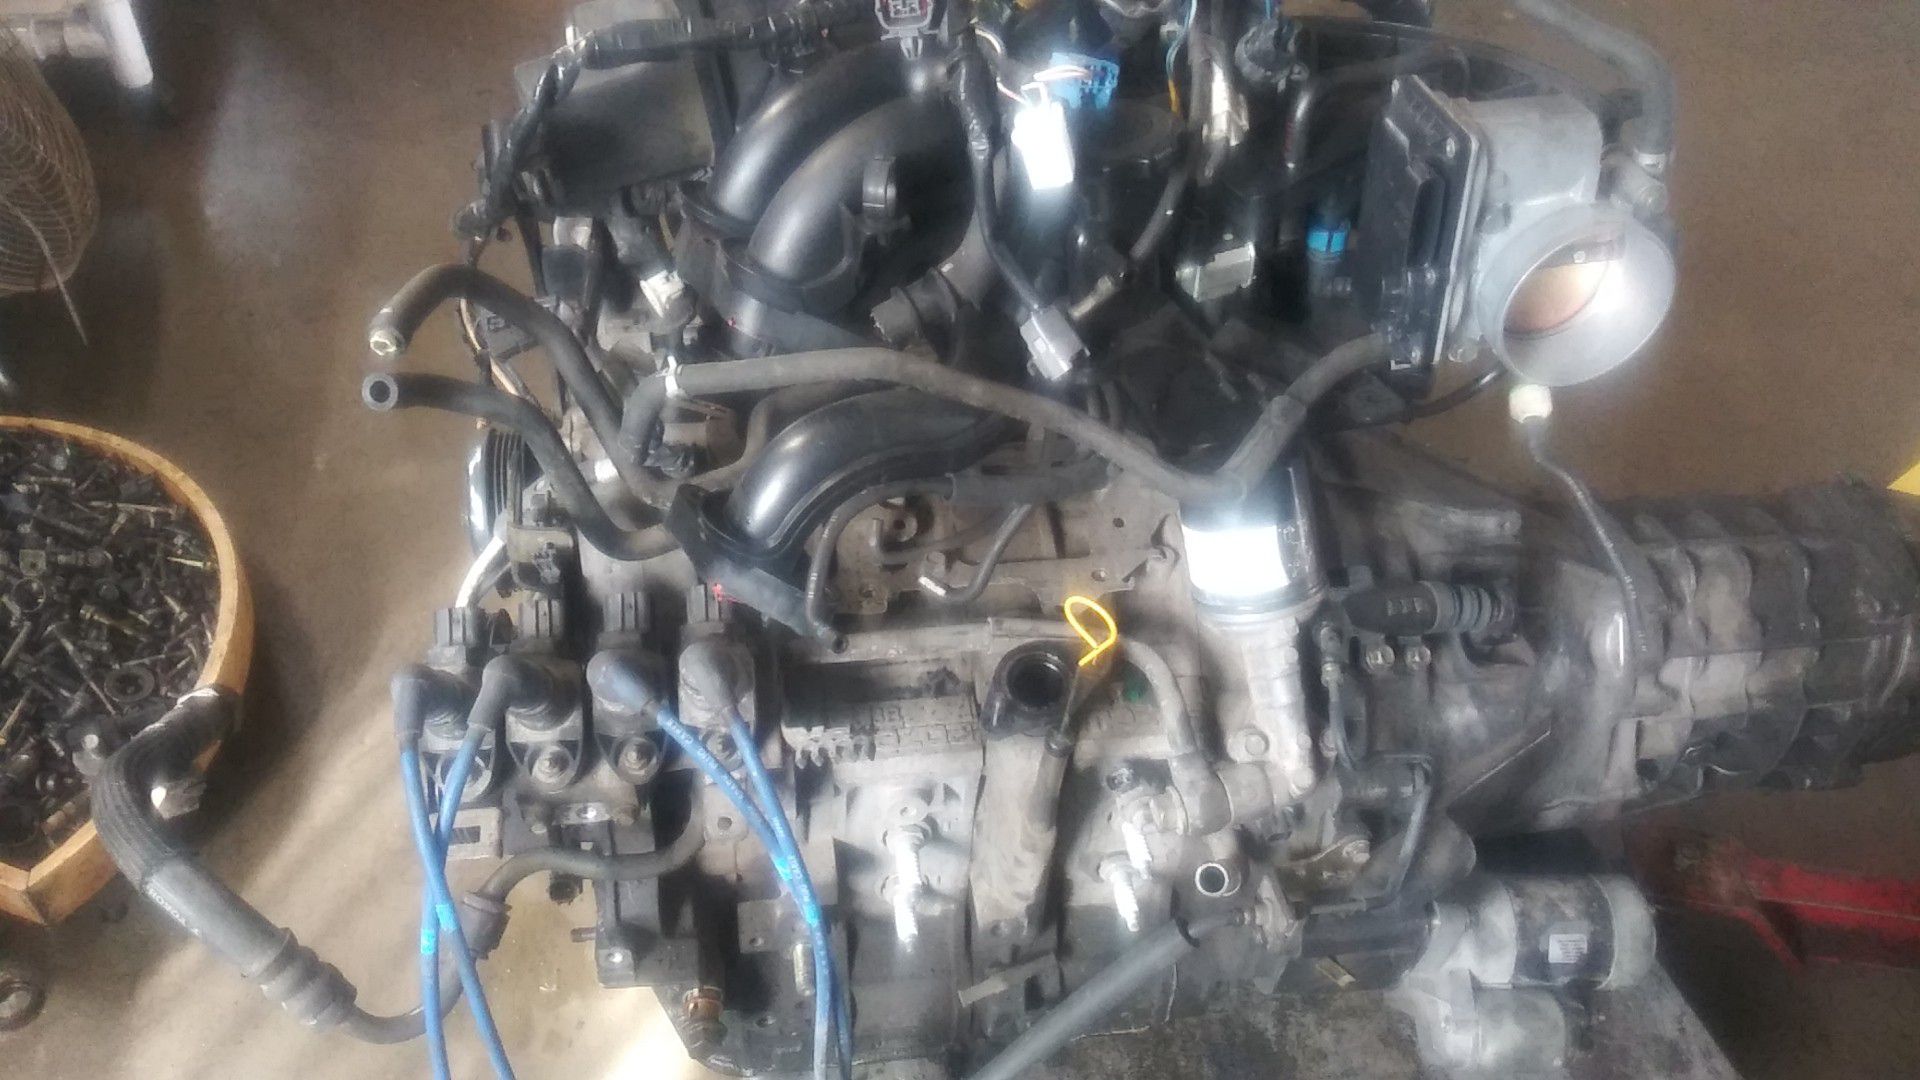 Mazda Rx-8 engine parts.